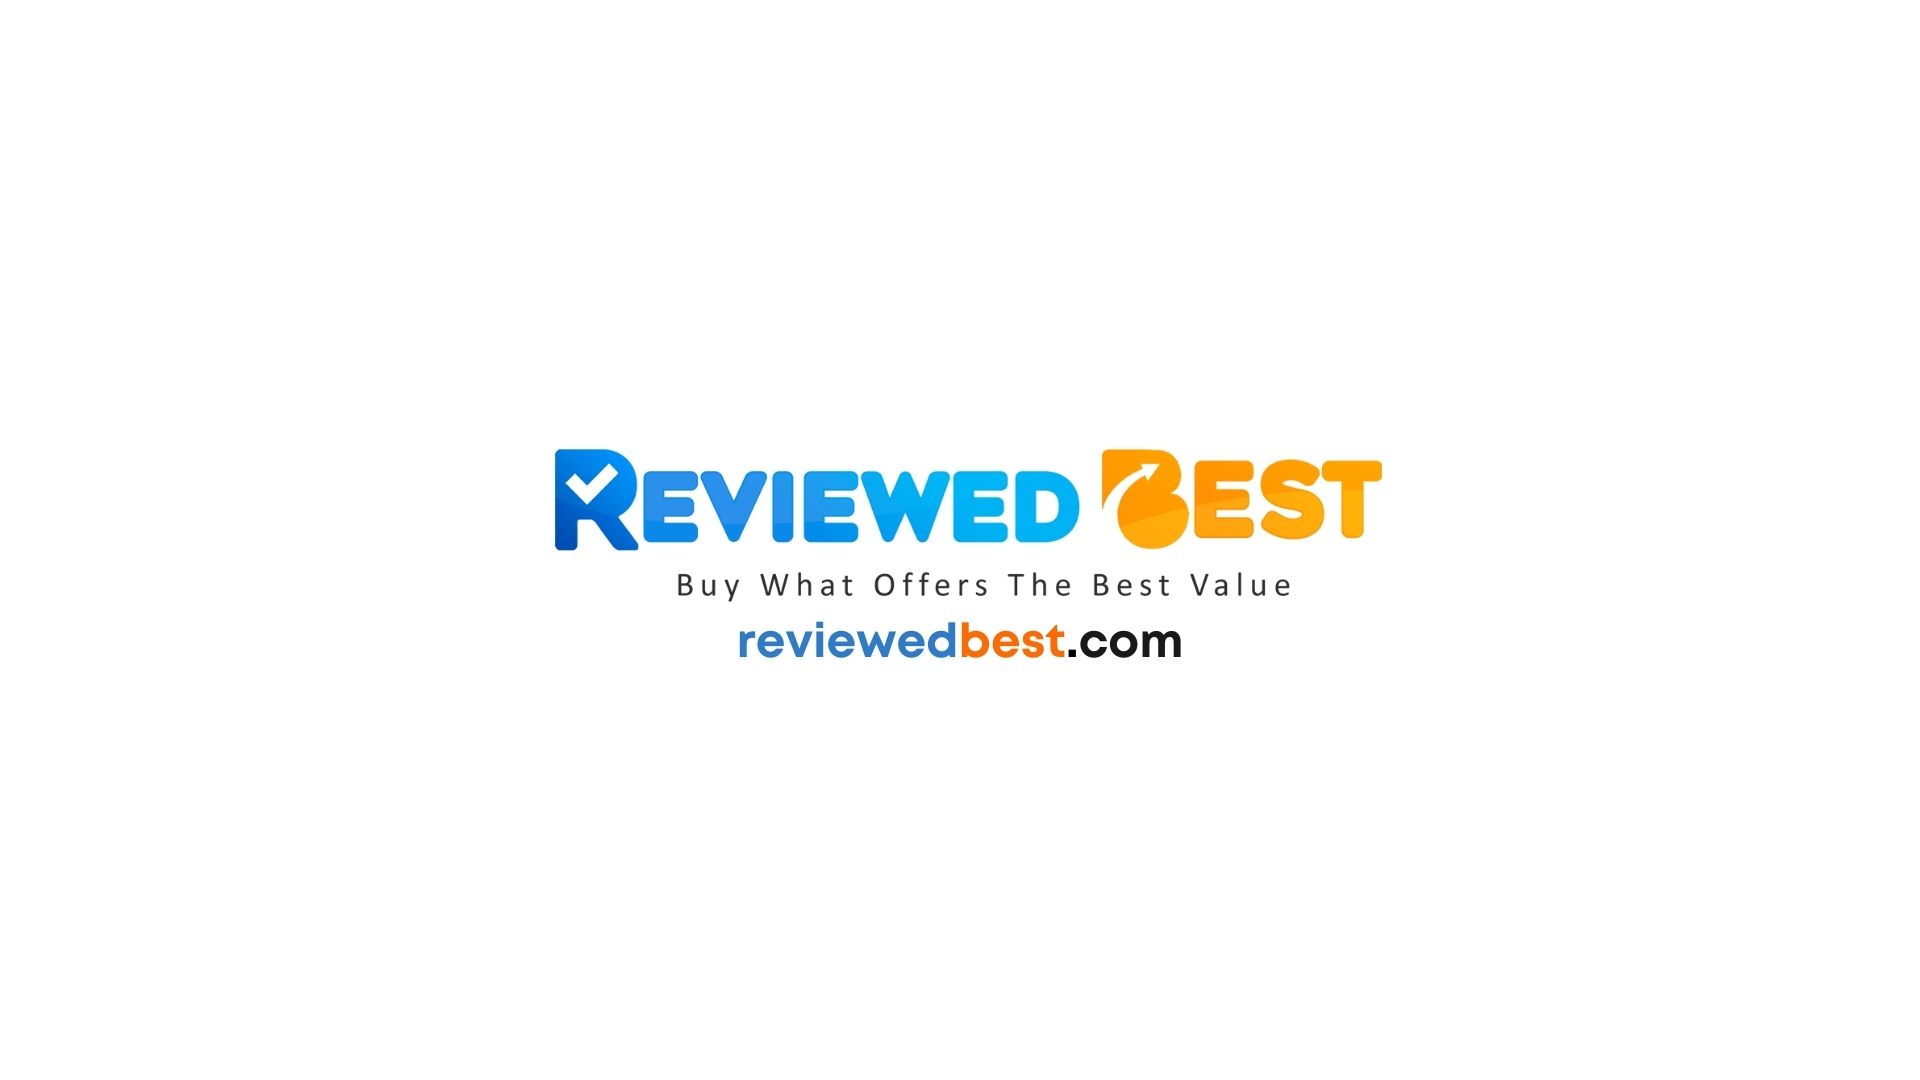 reviewedbest.com-product-reviews.jpg